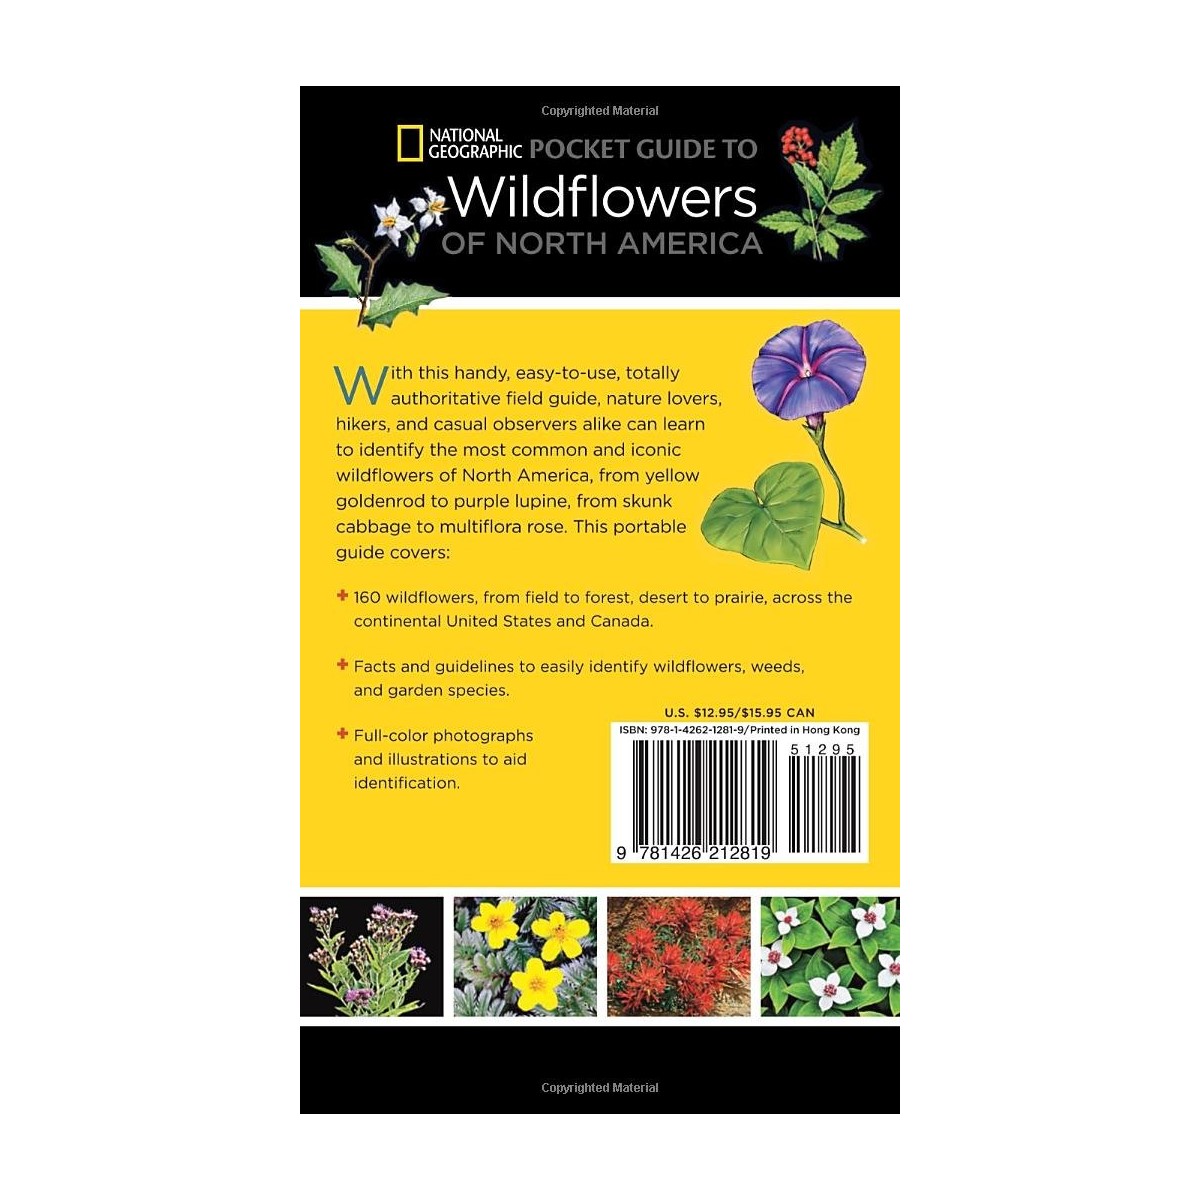 Wildflower facts